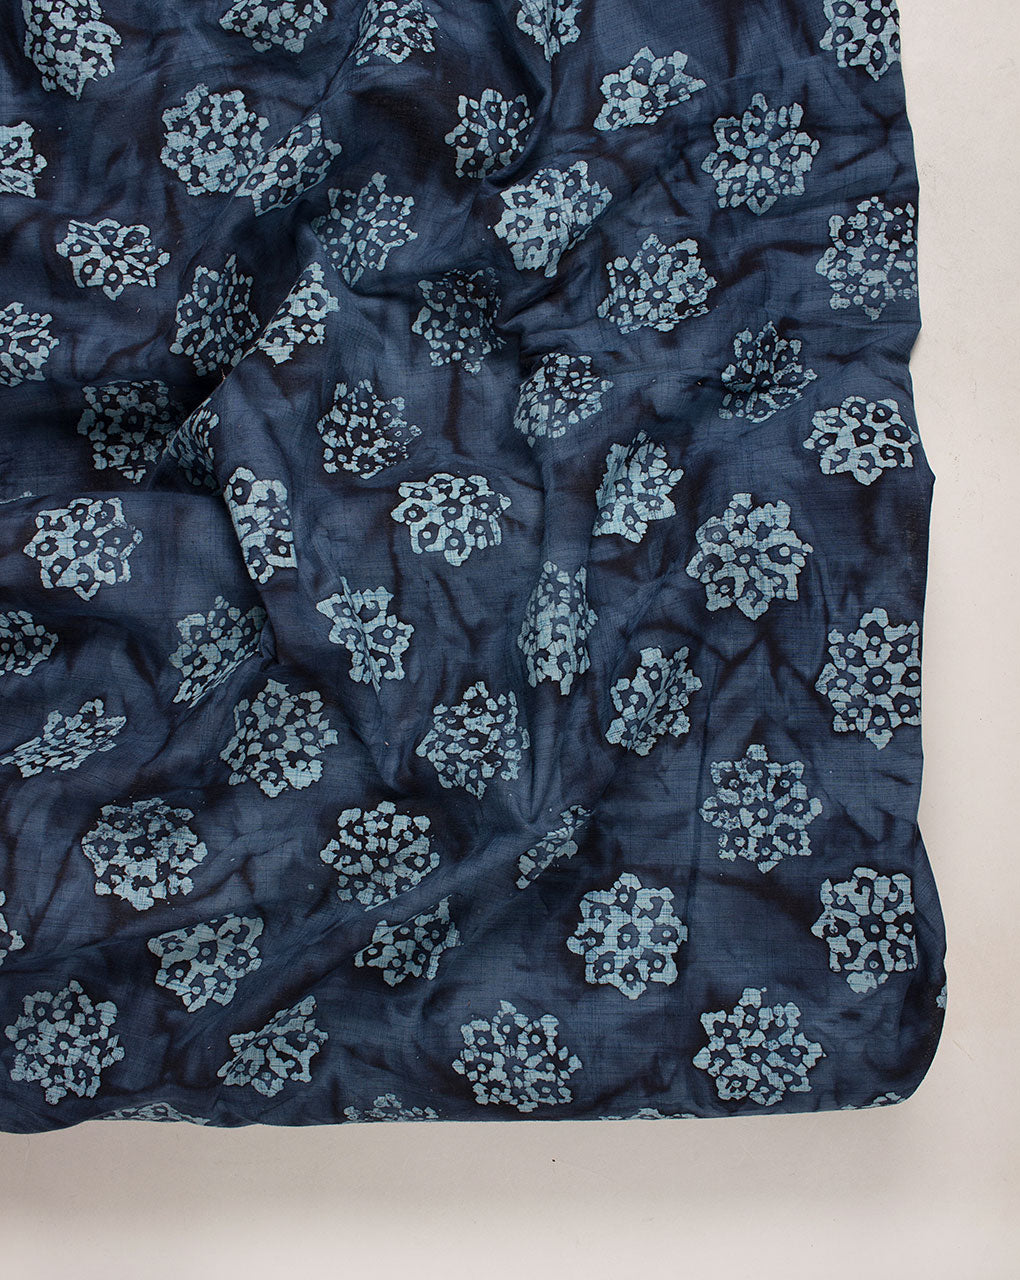 Handloom Fabrics - Shop Handloom Dress Materials Online | Fabriclore